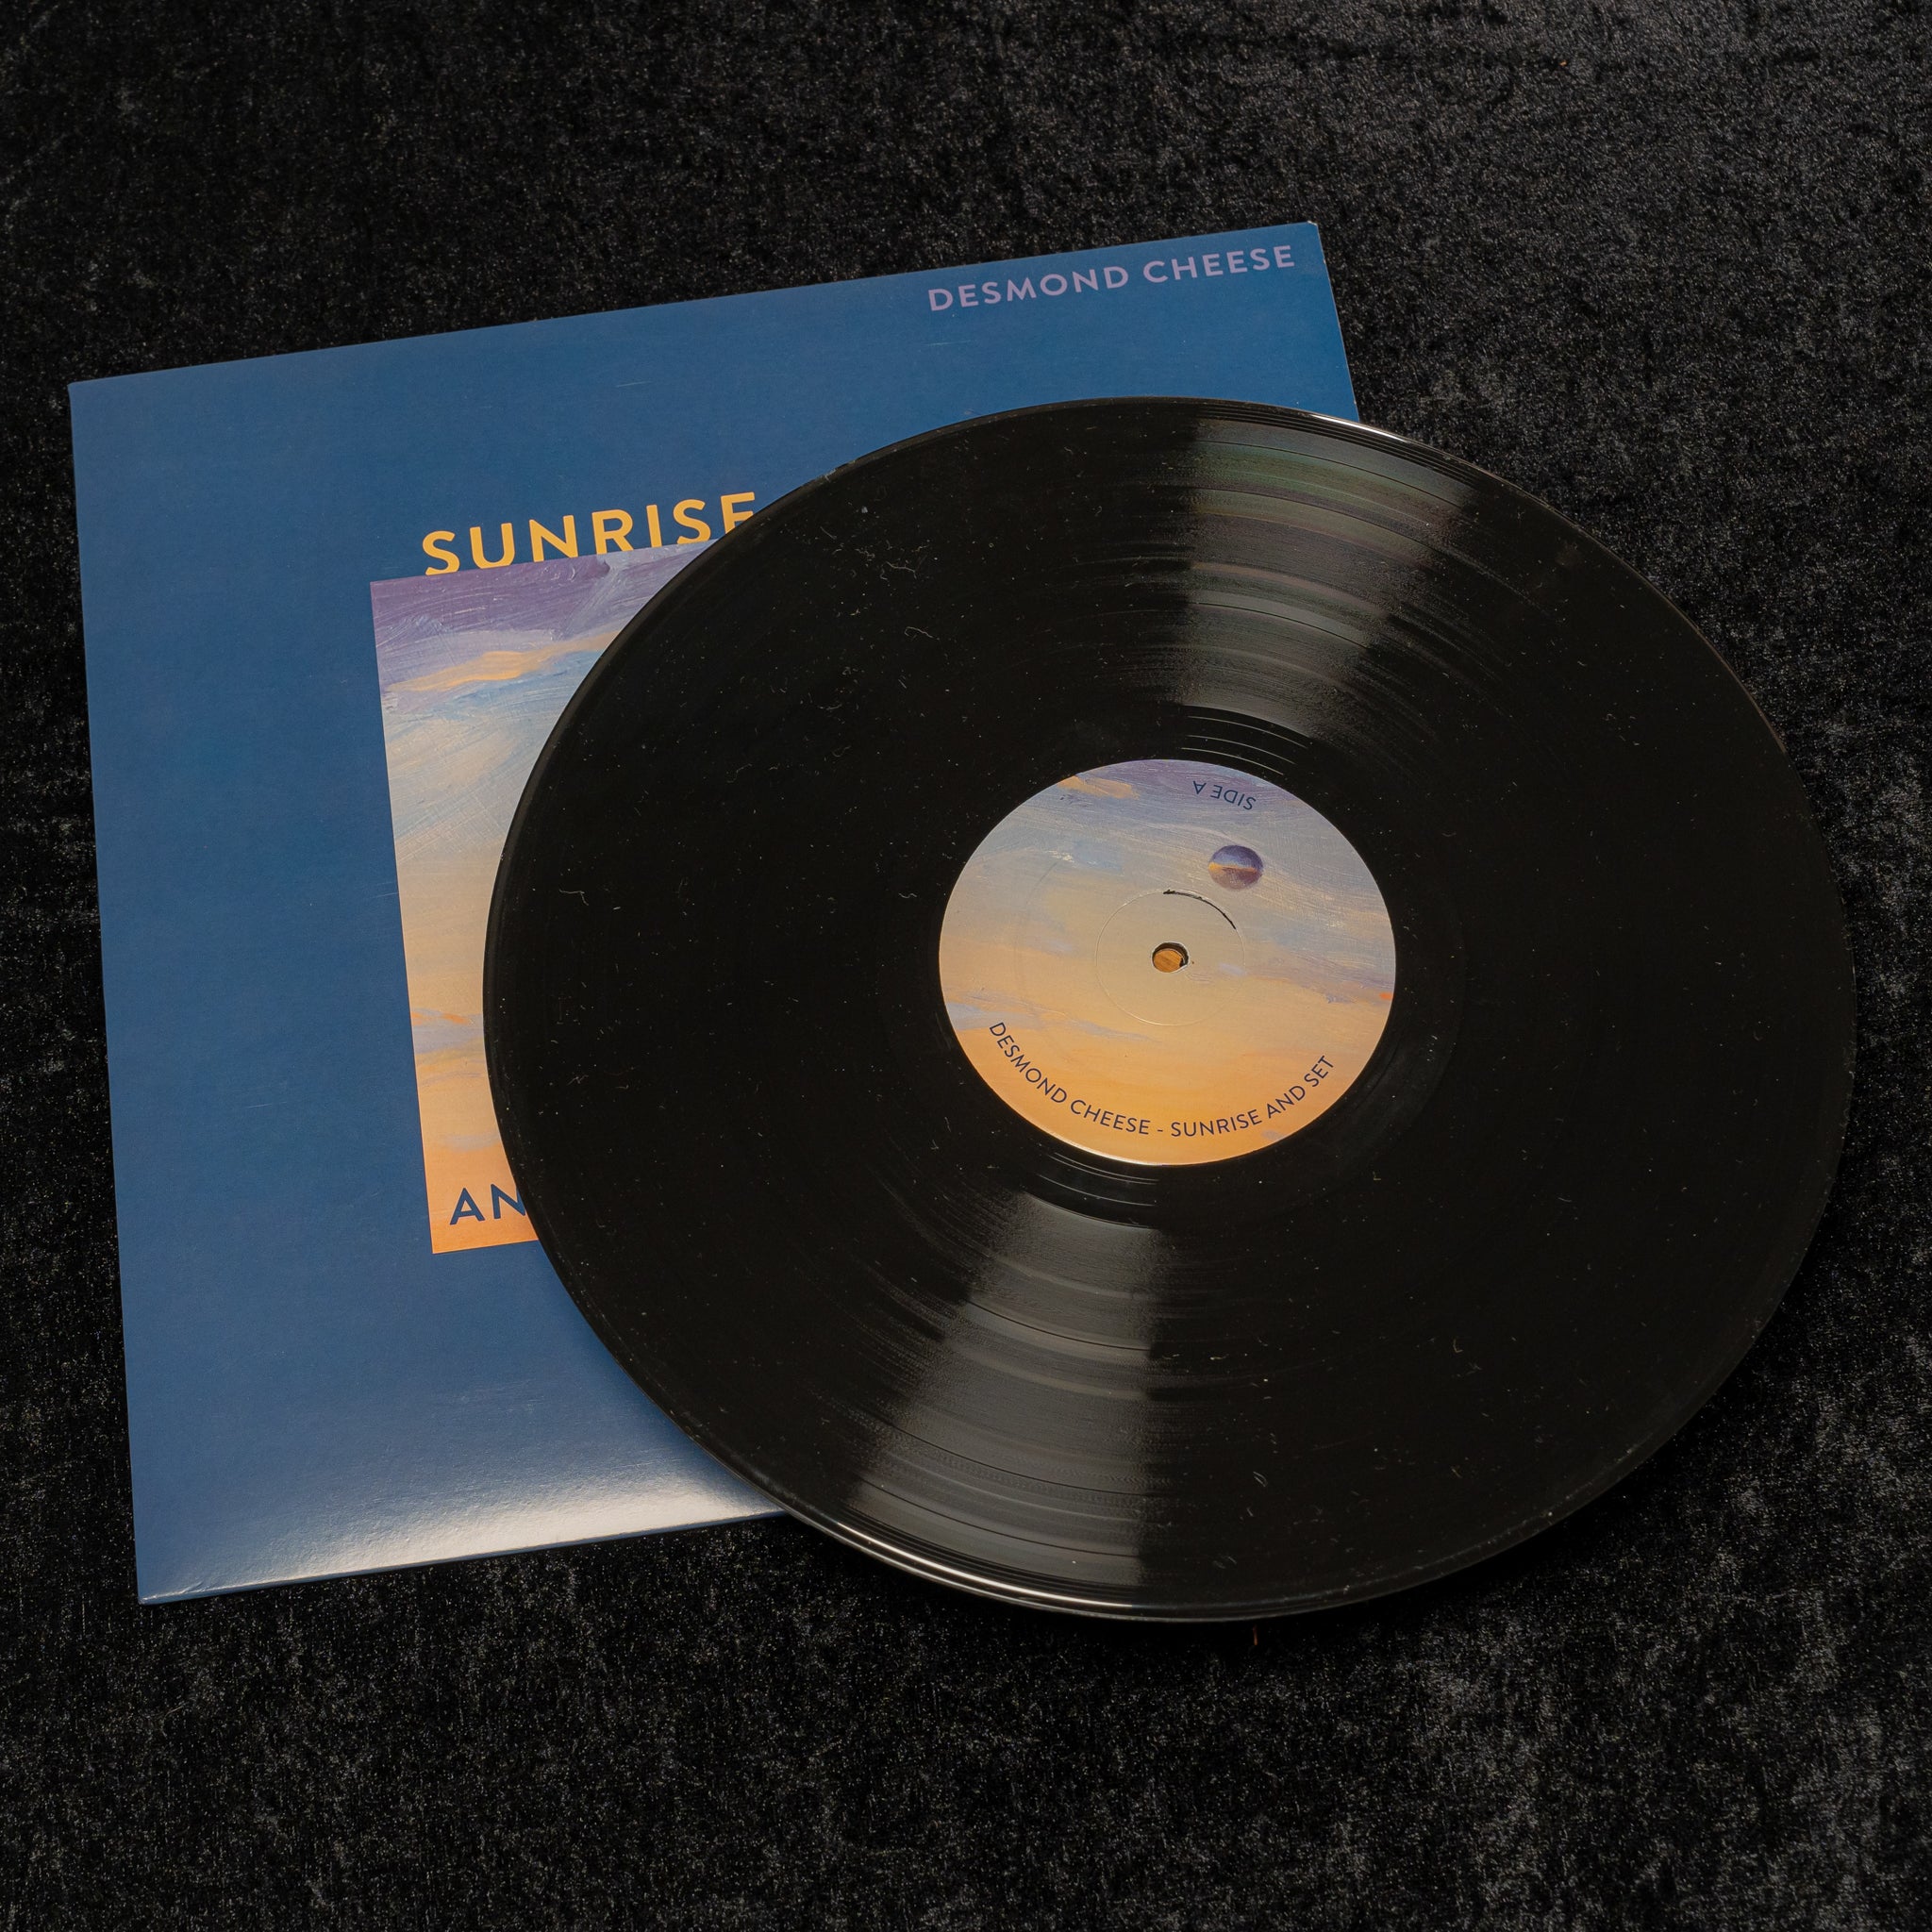 Sunrise and Set - 12" Vinyl Record